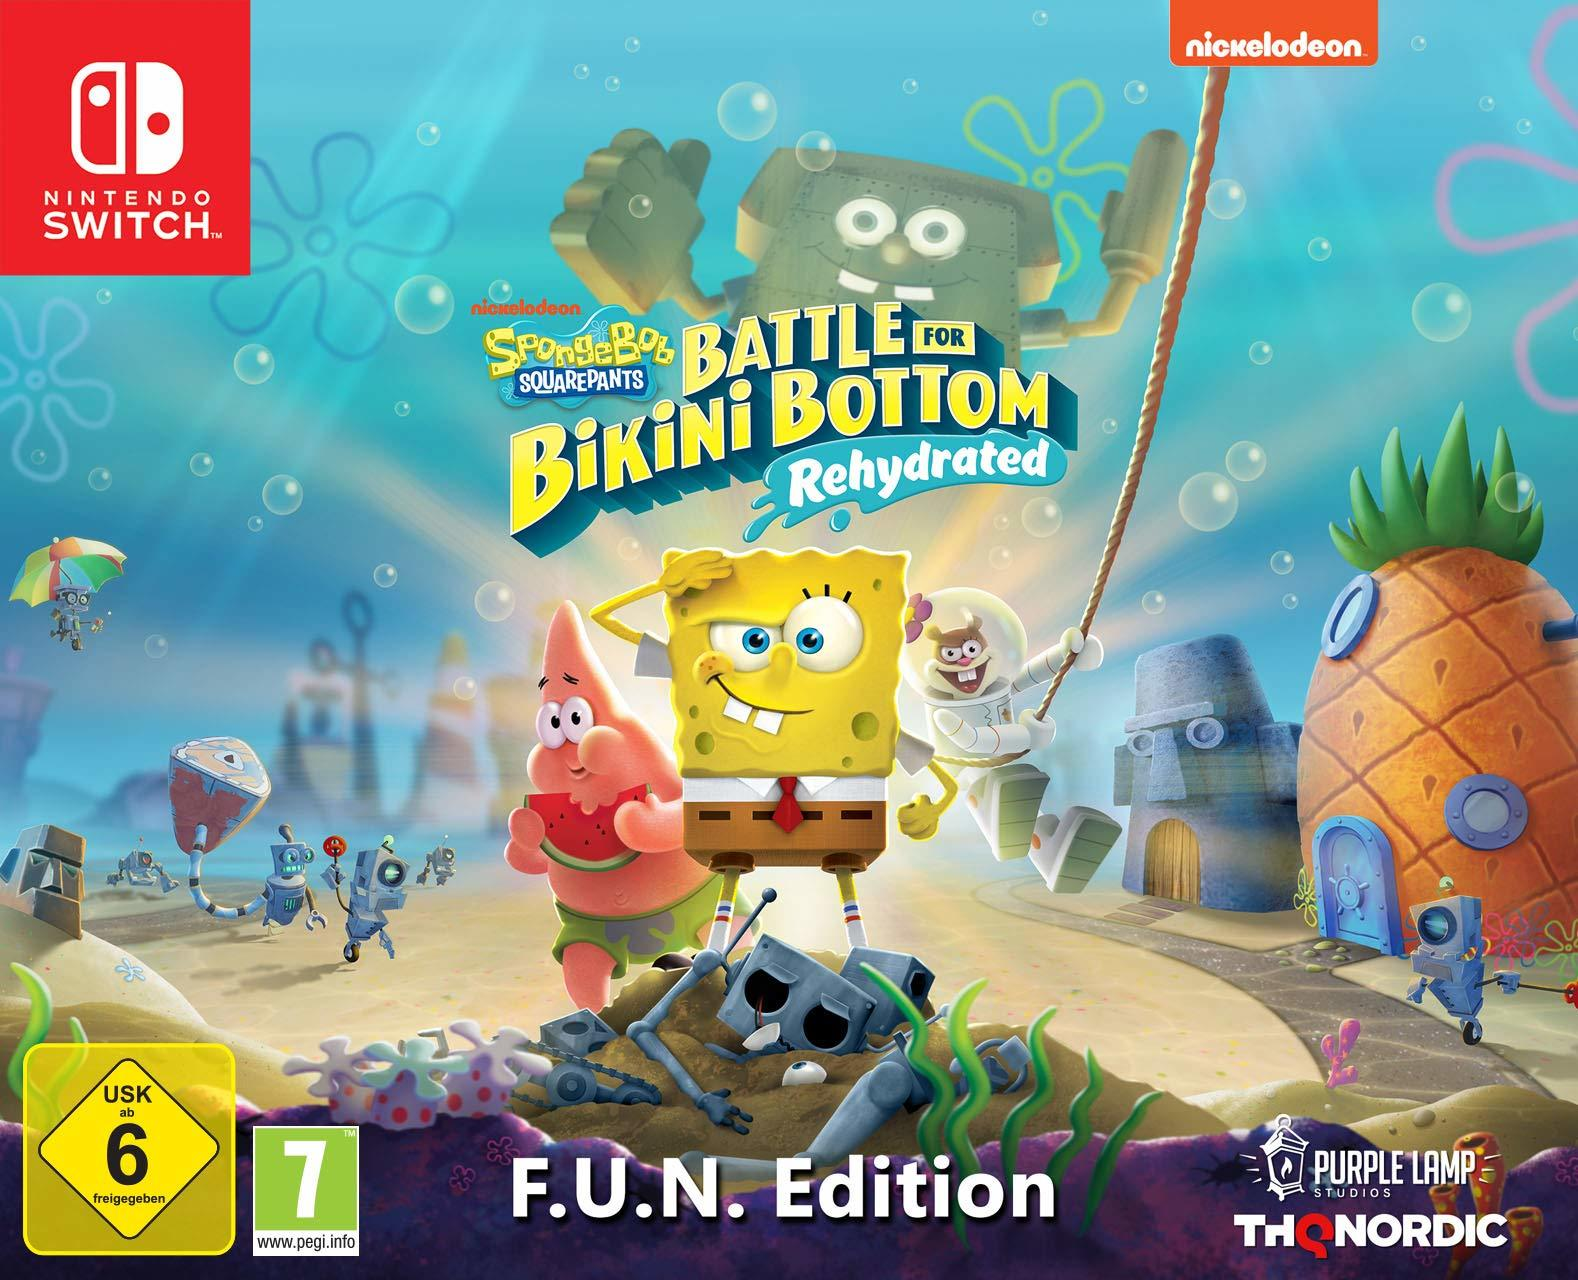 Spongebob Bikini - SquarePants: for Edition Switch] [Nintendo Bottom F.U.N. - Battle Rehydrated